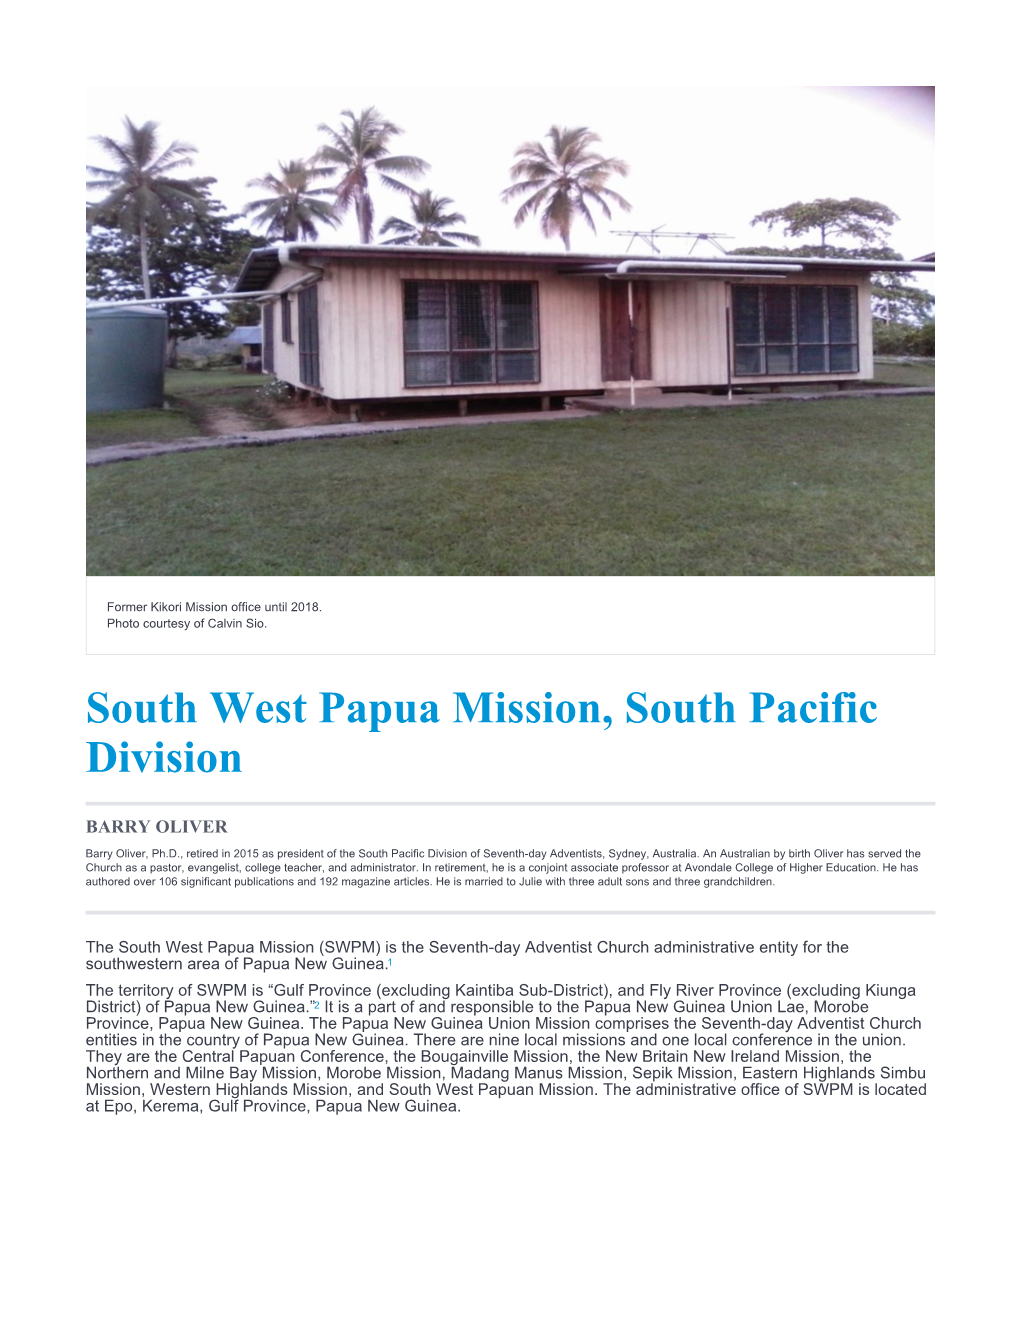 South West Papua Mission, South Pacific Division